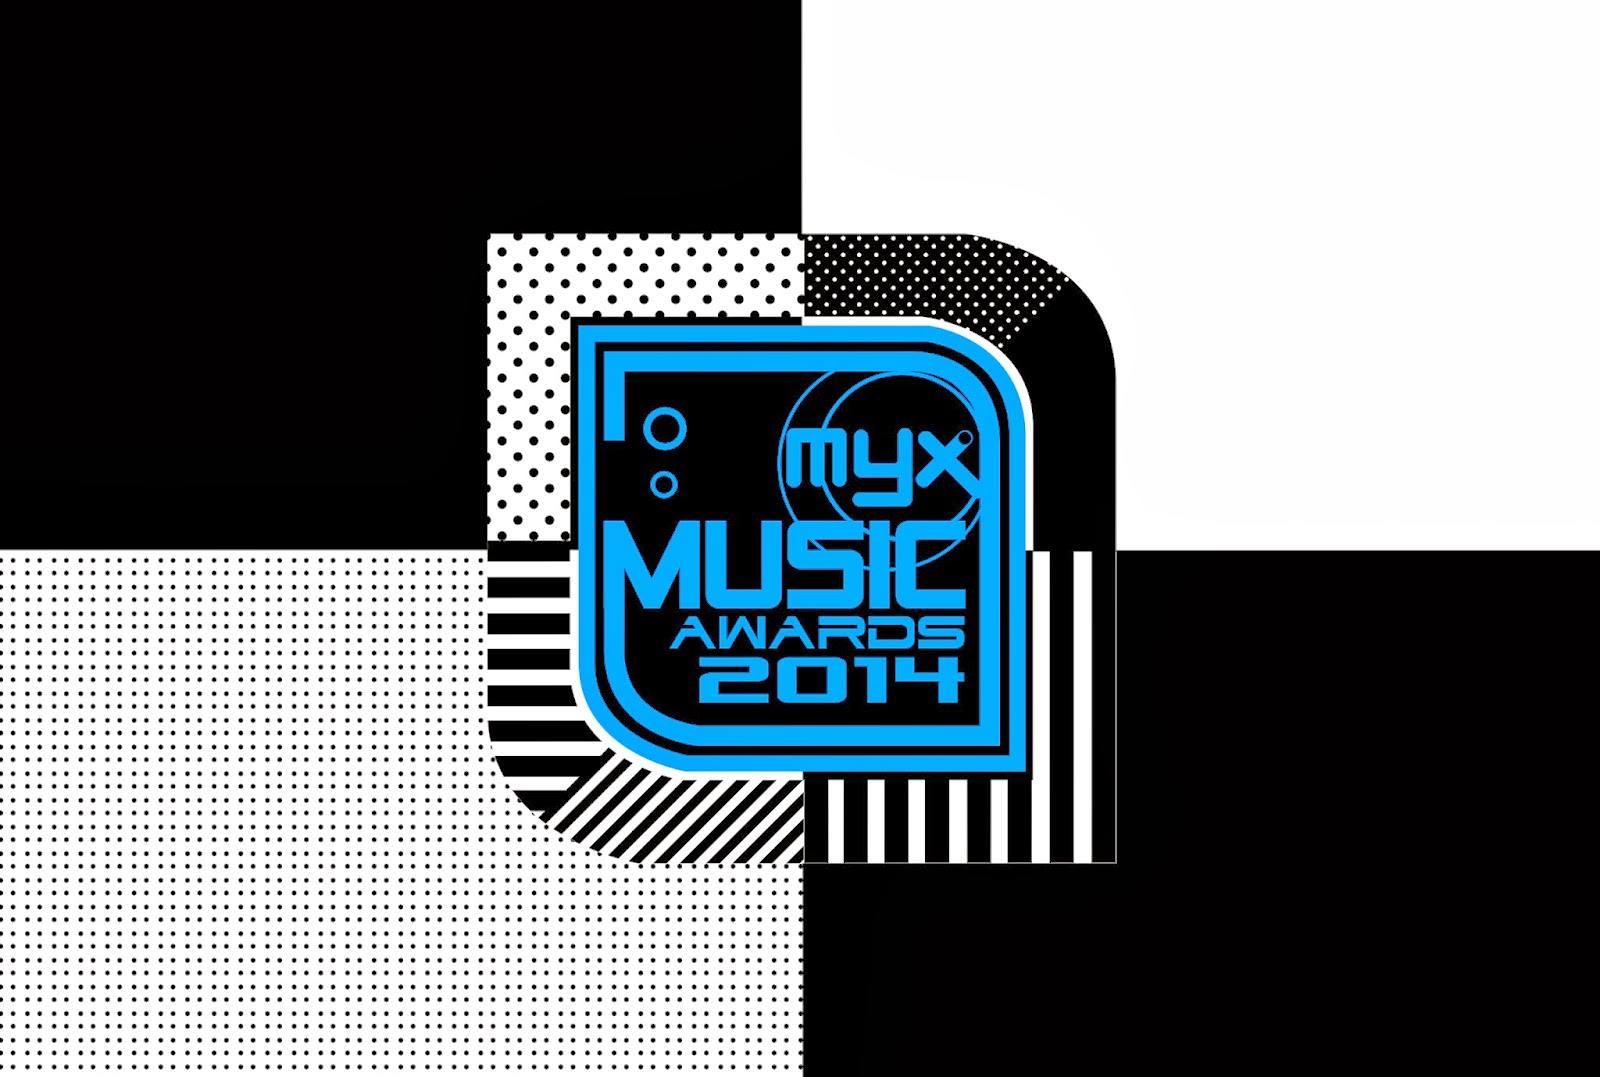 Myx Music Awards 2014 winners